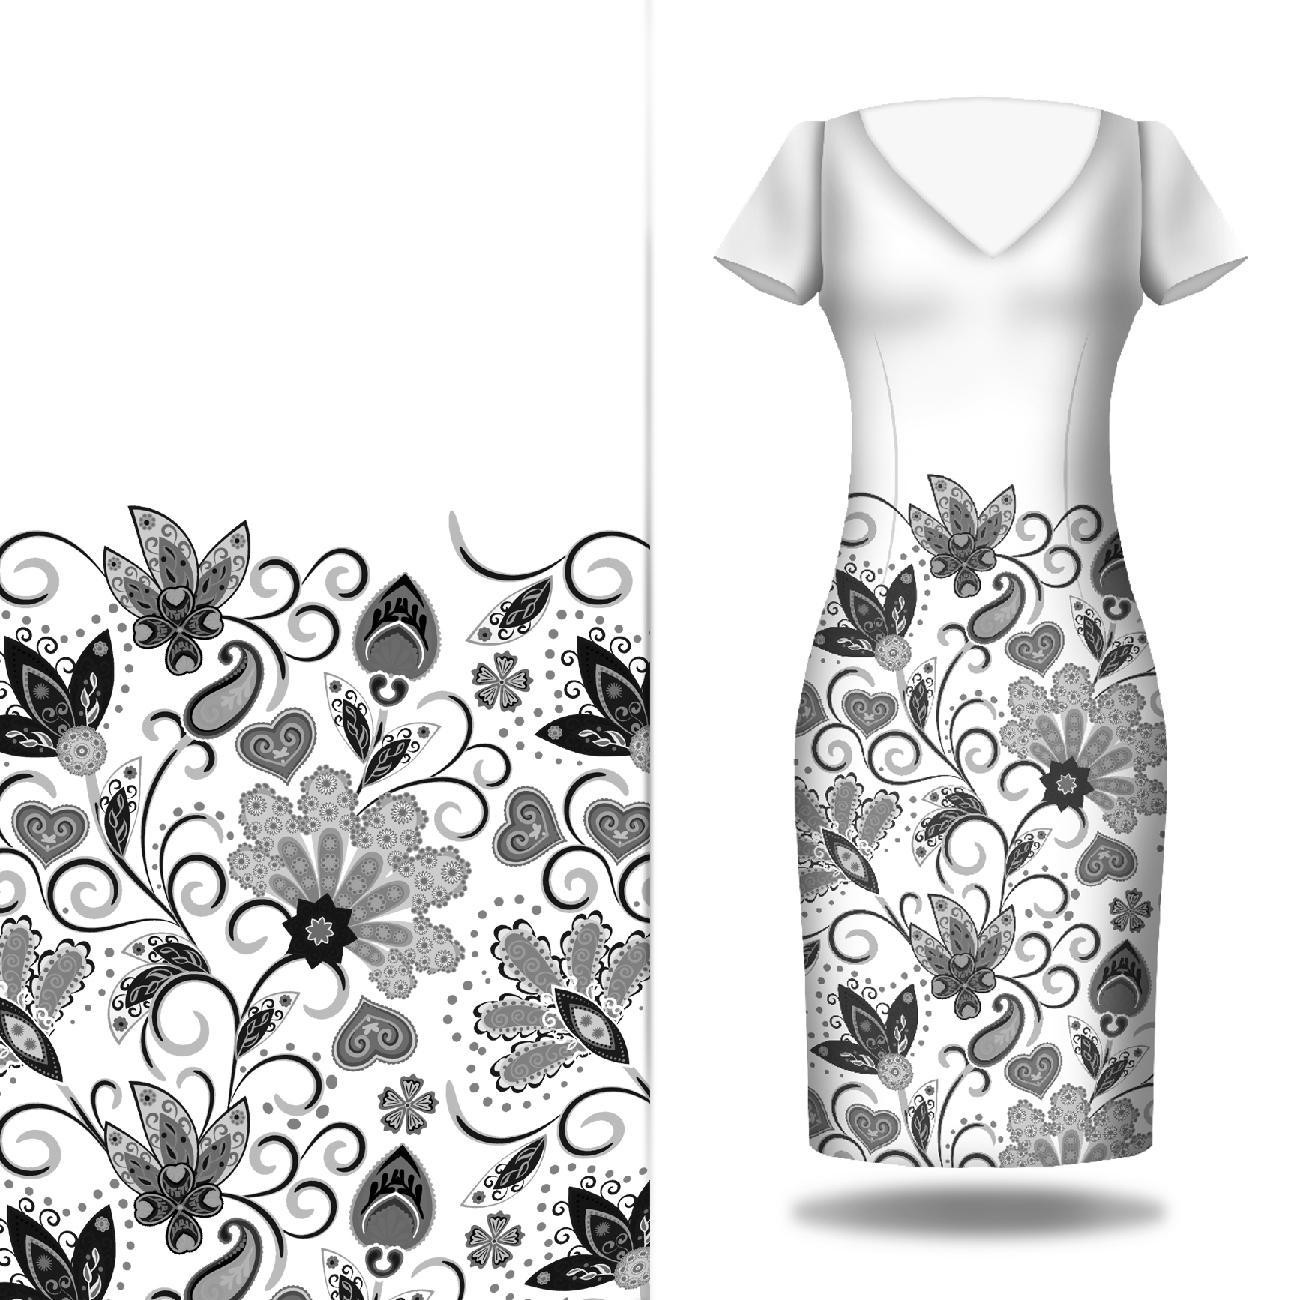 KVĚTY (vzor 2 Šedá) / bílá - panel pro šaty Len 100%